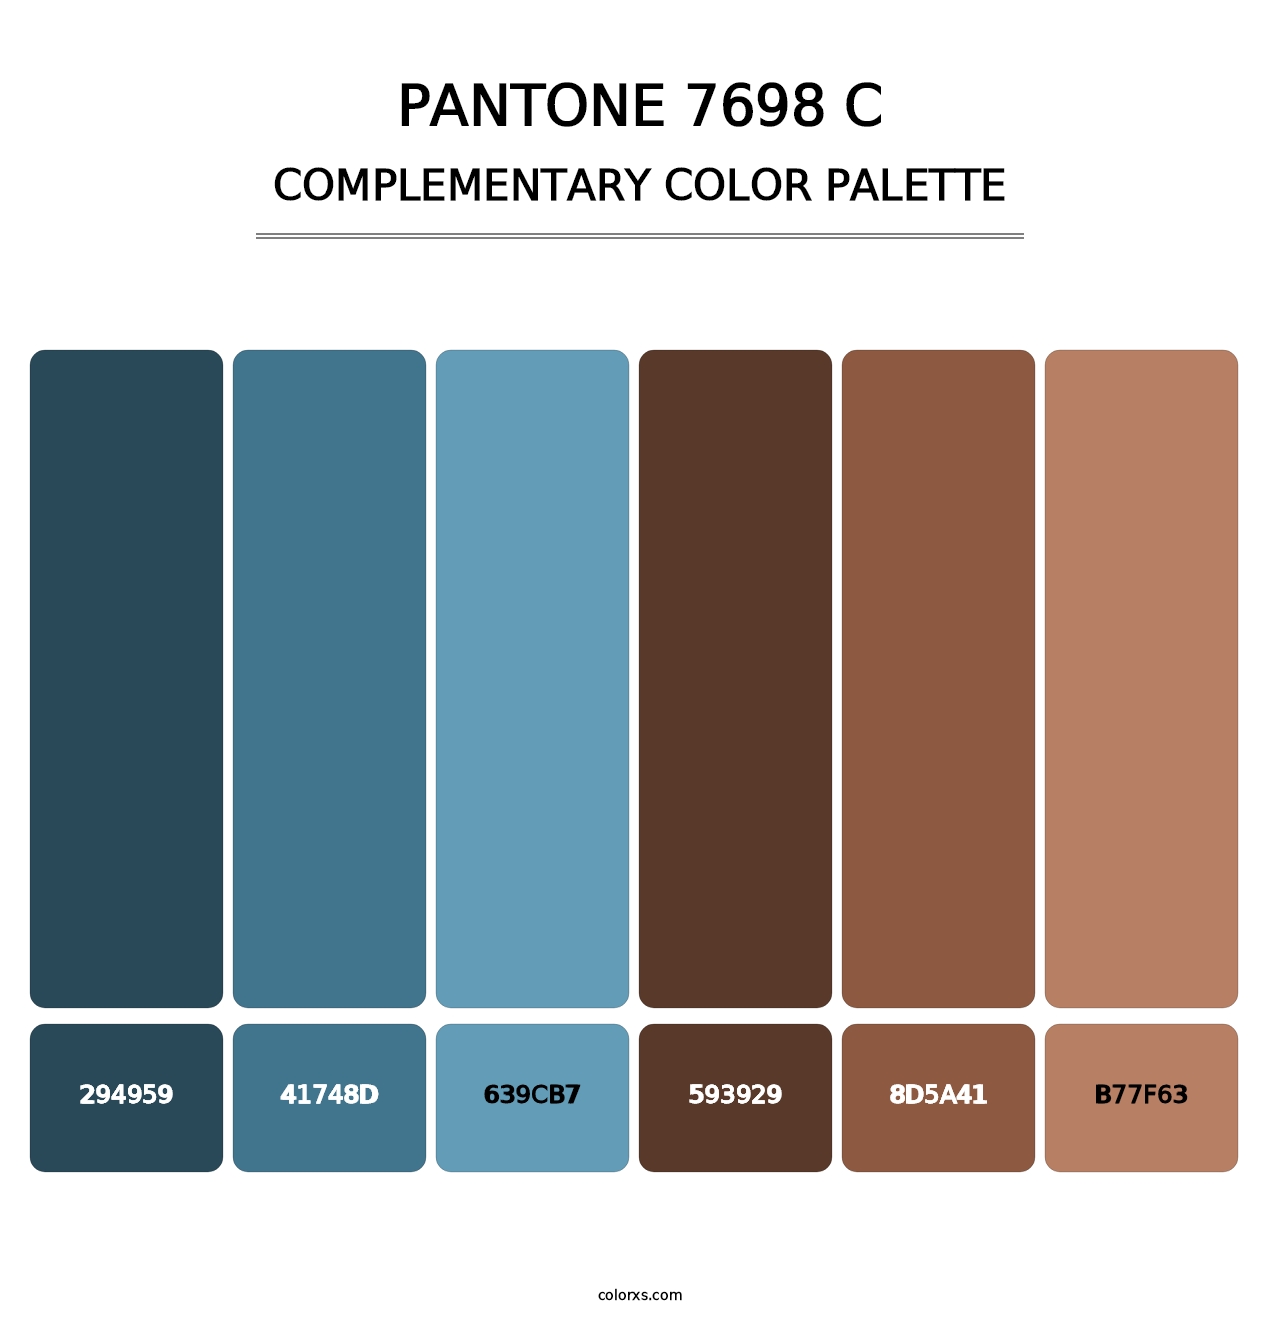 PANTONE 7698 C - Complementary Color Palette